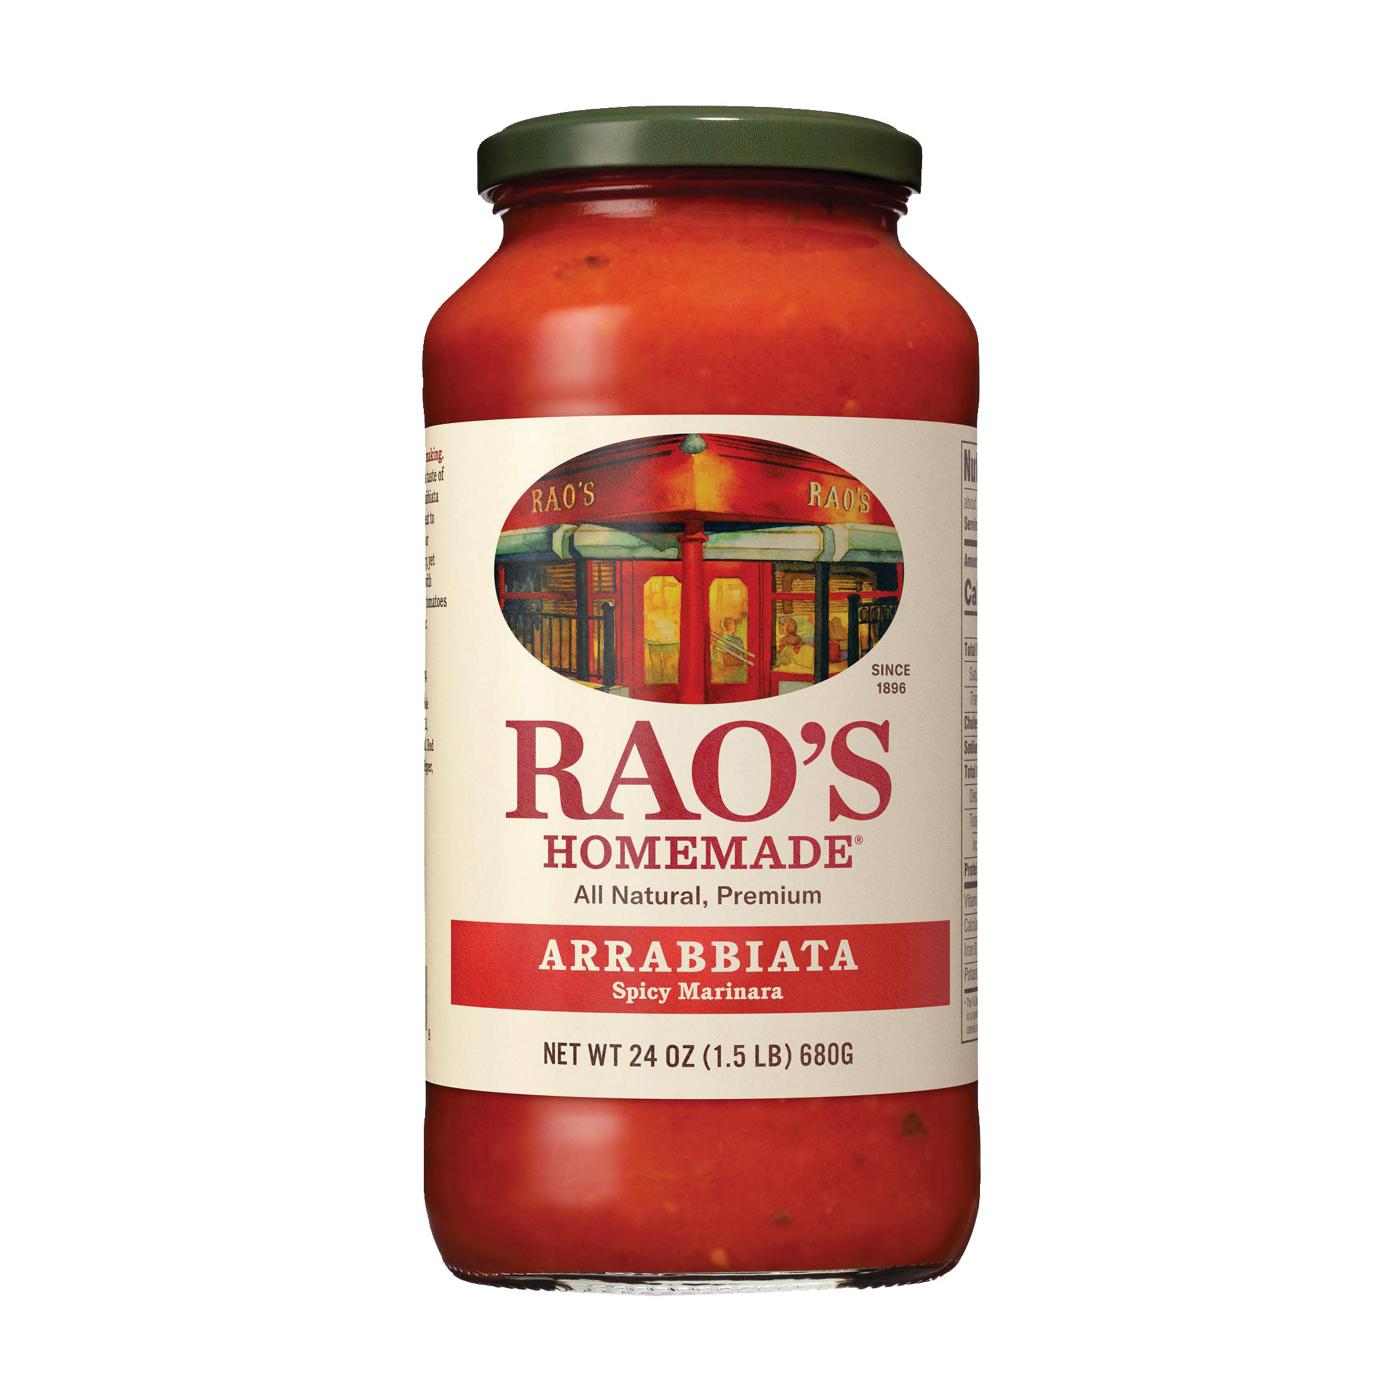 Rao's Homemade Arrabbiata Spicy Tomato Sauce; image 1 of 4